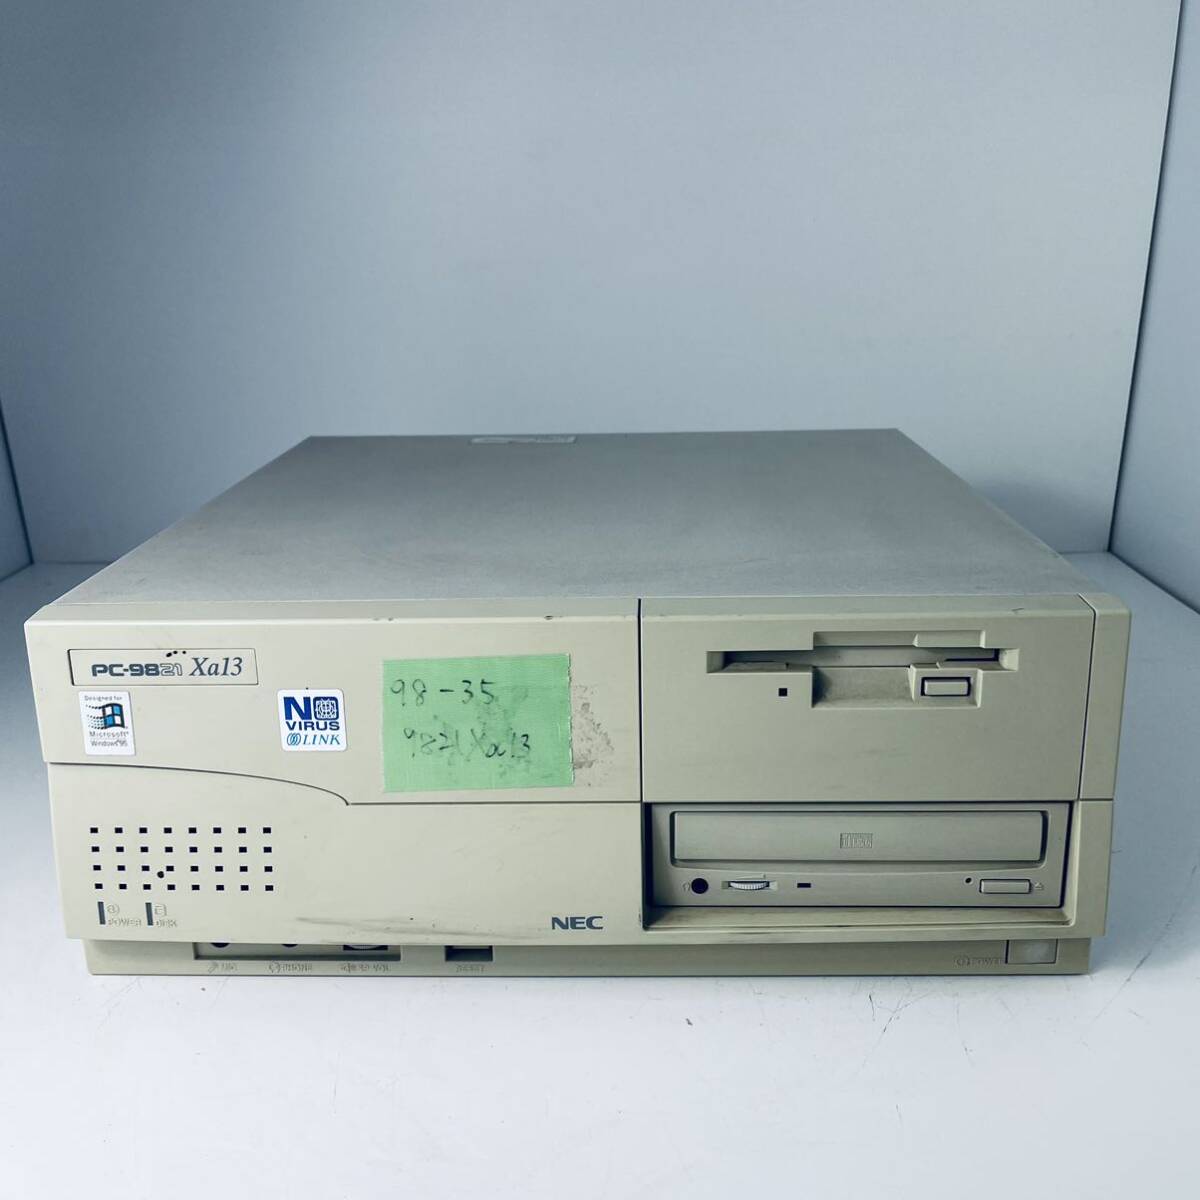 98-35 NEC PC-9821Xa13 HDD欠 Pentium 133Mhz 電源入りますが画面出力されませんの画像1